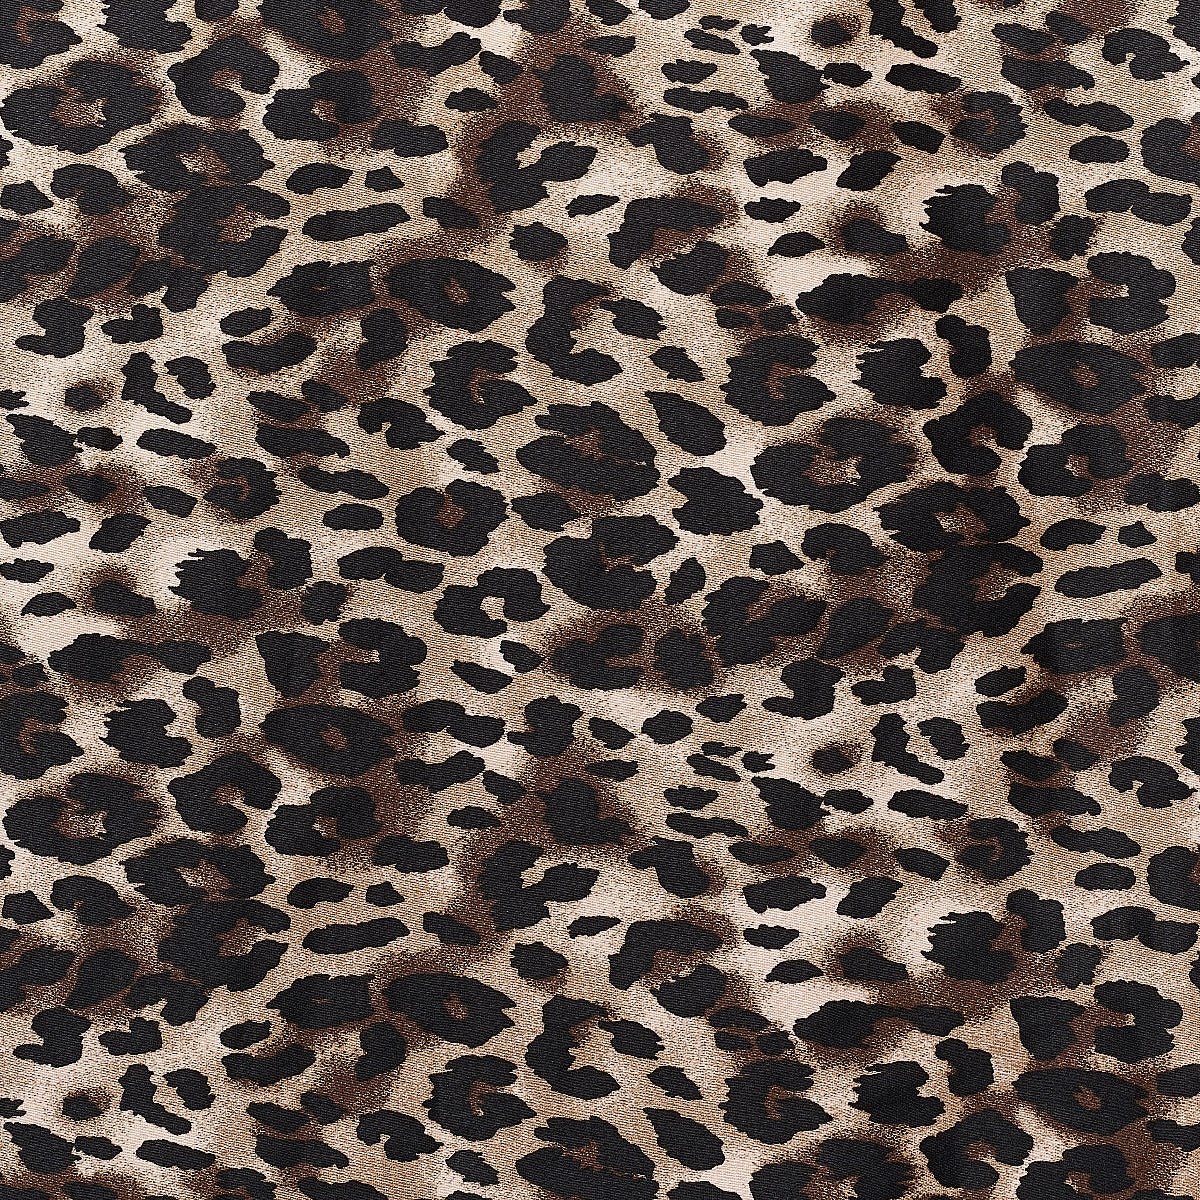 brown leopard spot print fabric swatch